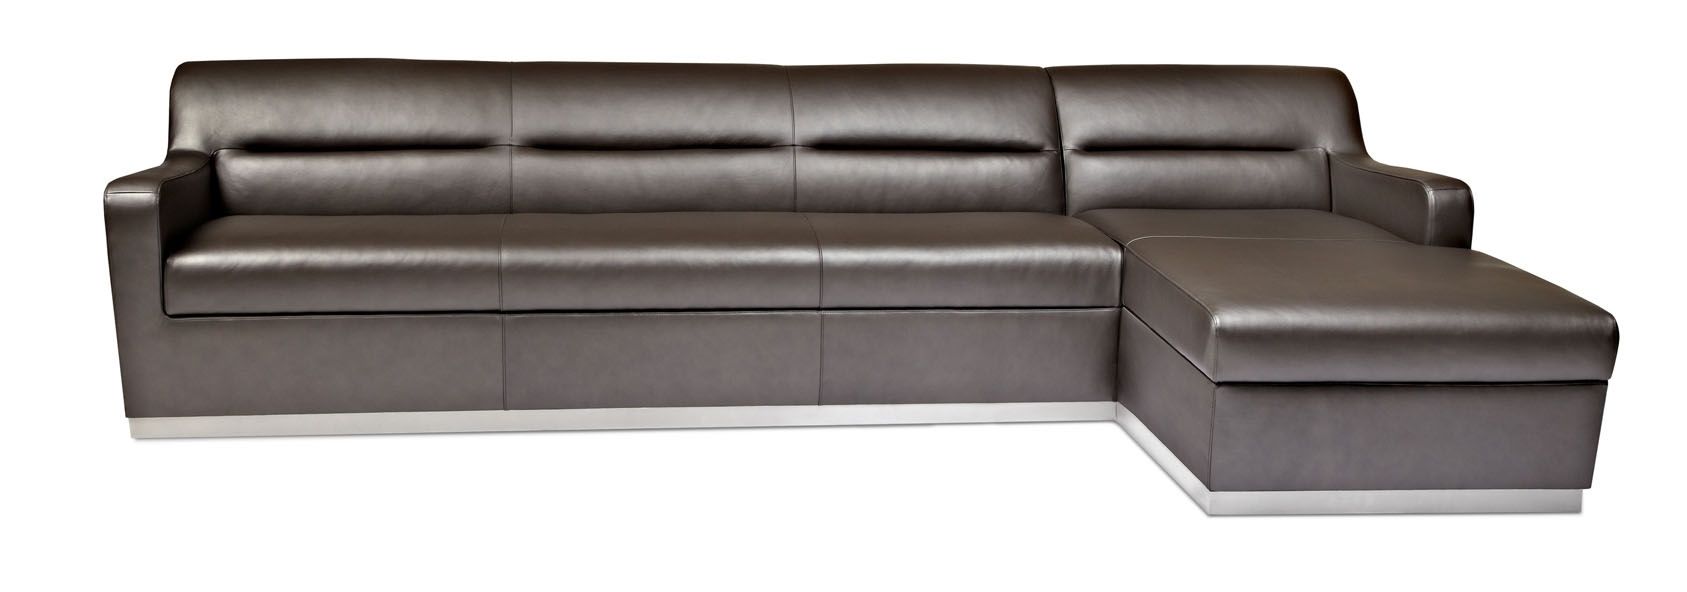 American Leather Niagara Sectional Sofa | Modern Furniture Inside Niagara Sectional Sofas (Photo 6 of 10)